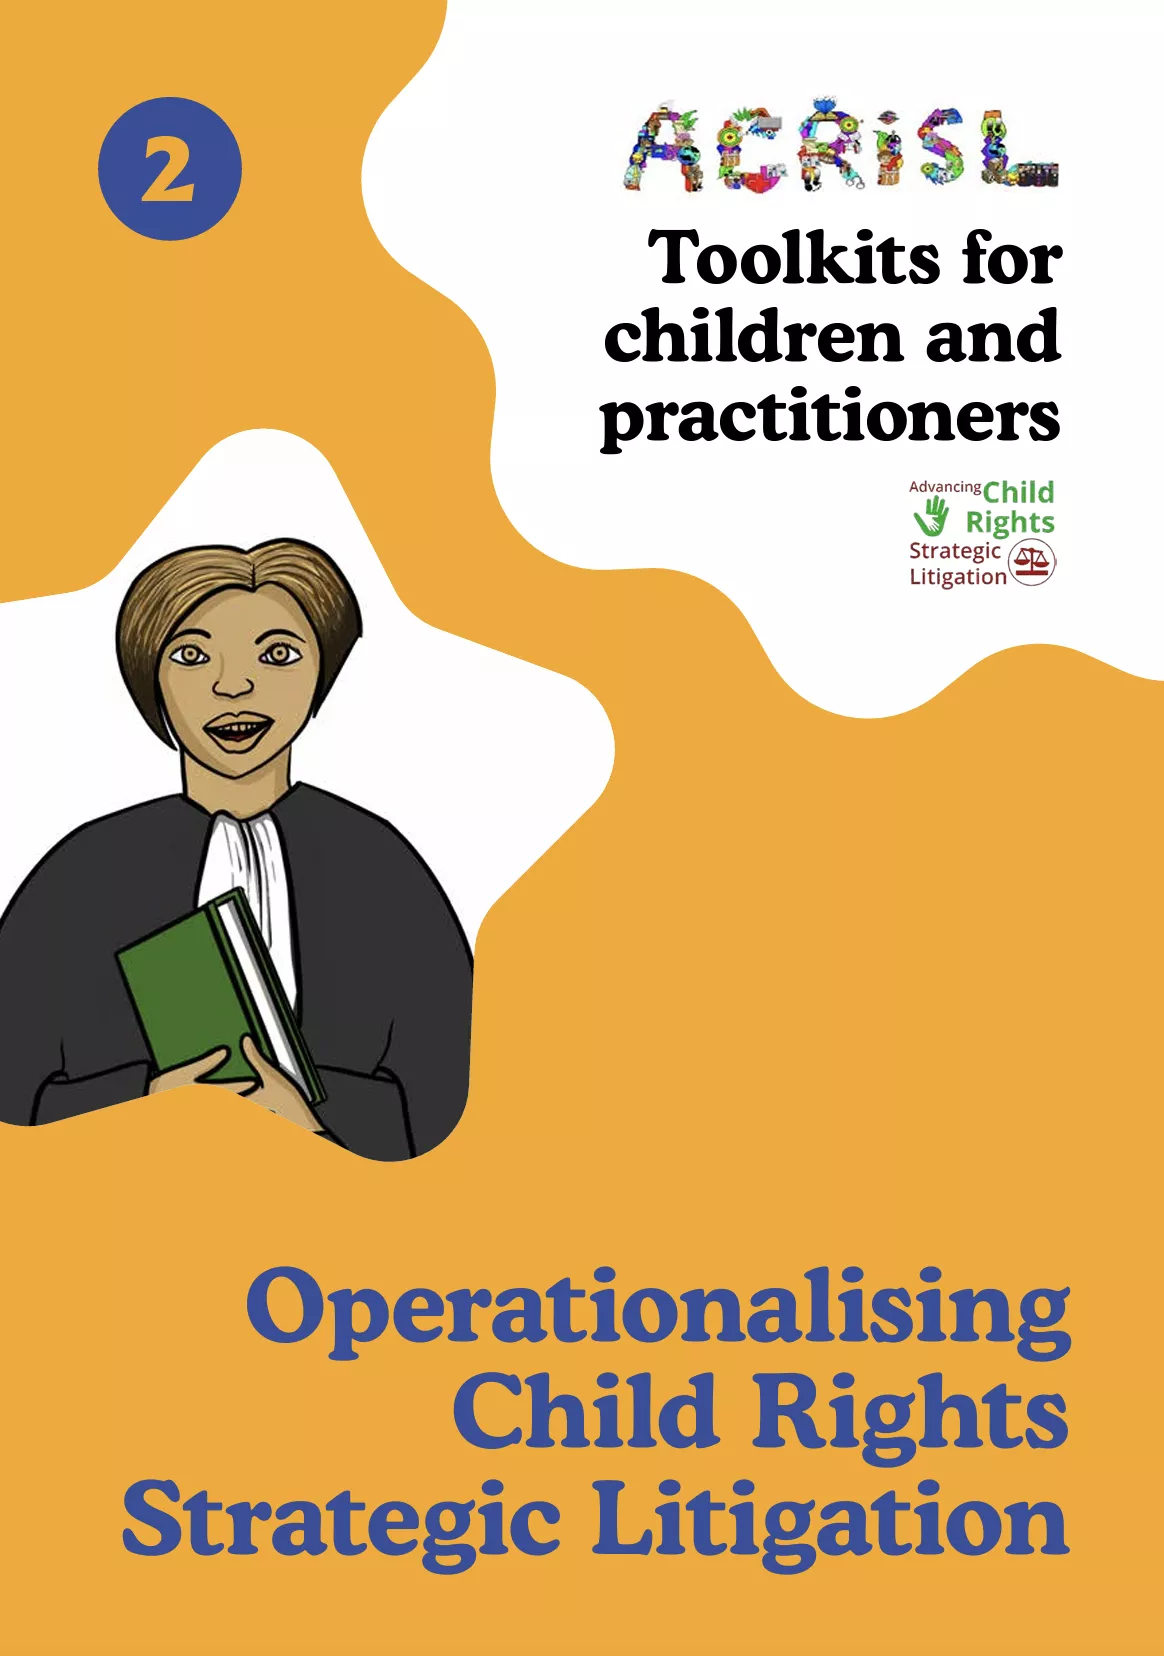 Toolkit 2: Operationalising Child Rights Strategic Litigation